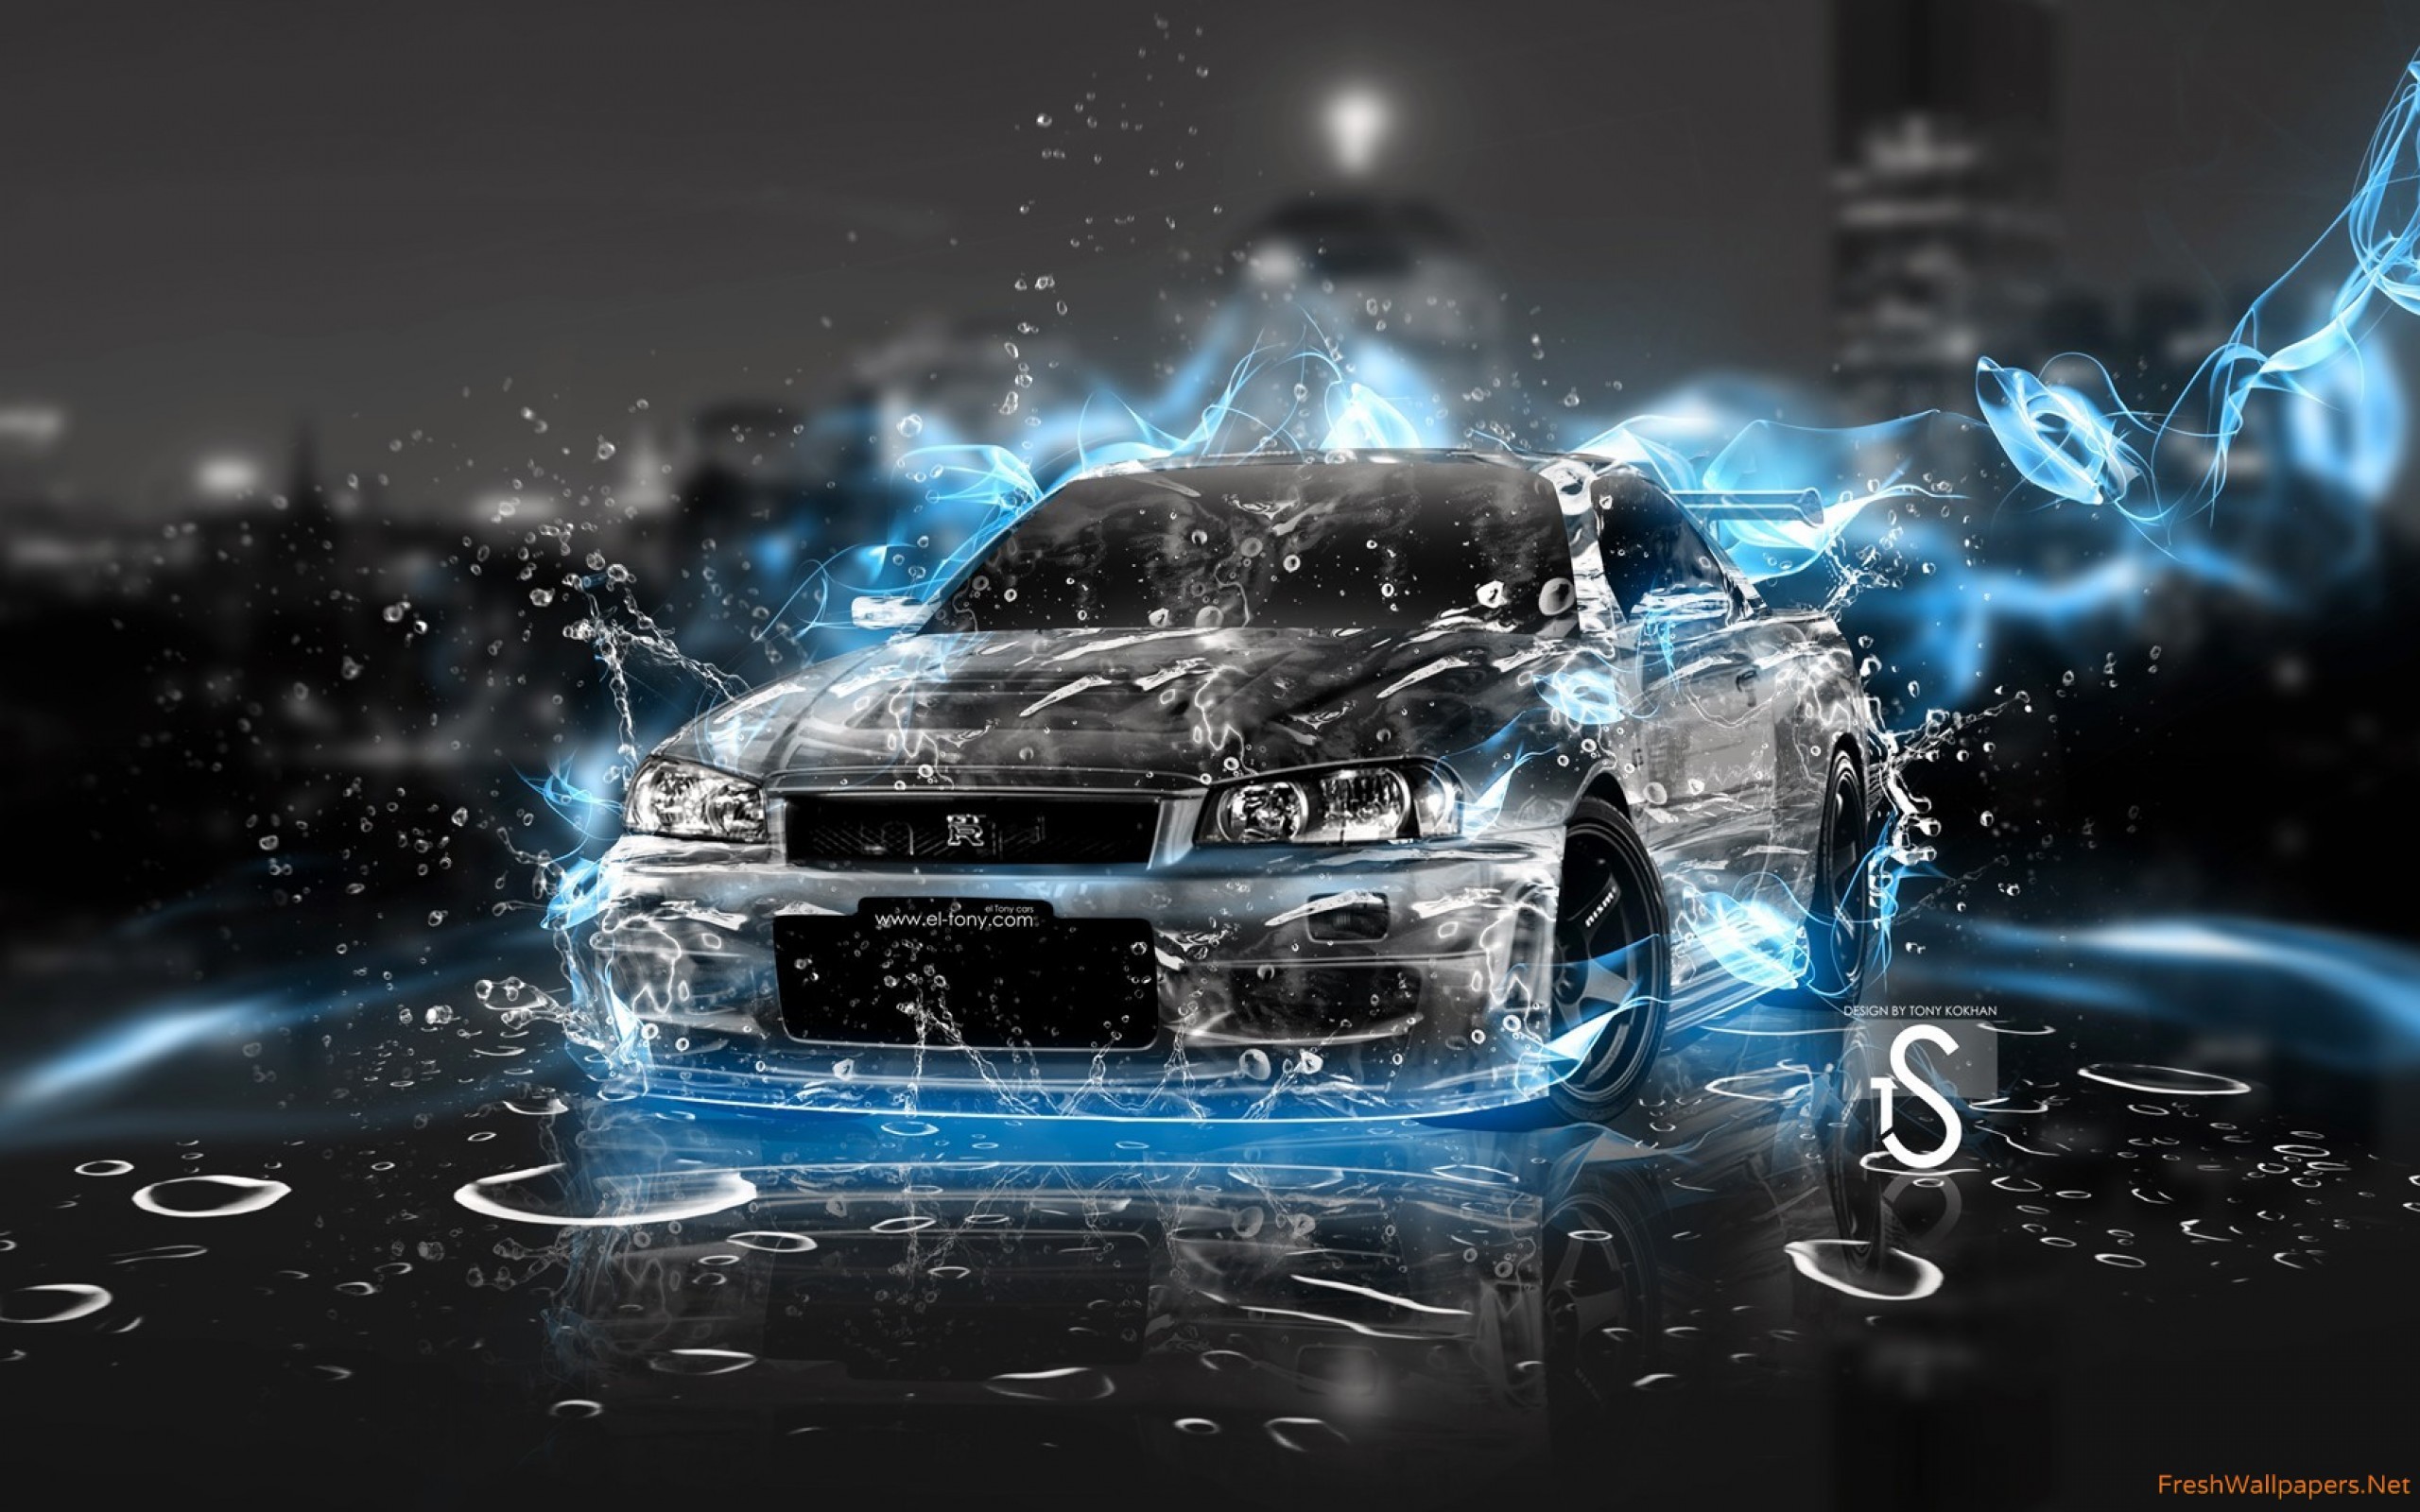 2560x1600 car-graphics-background Wallpaper: 